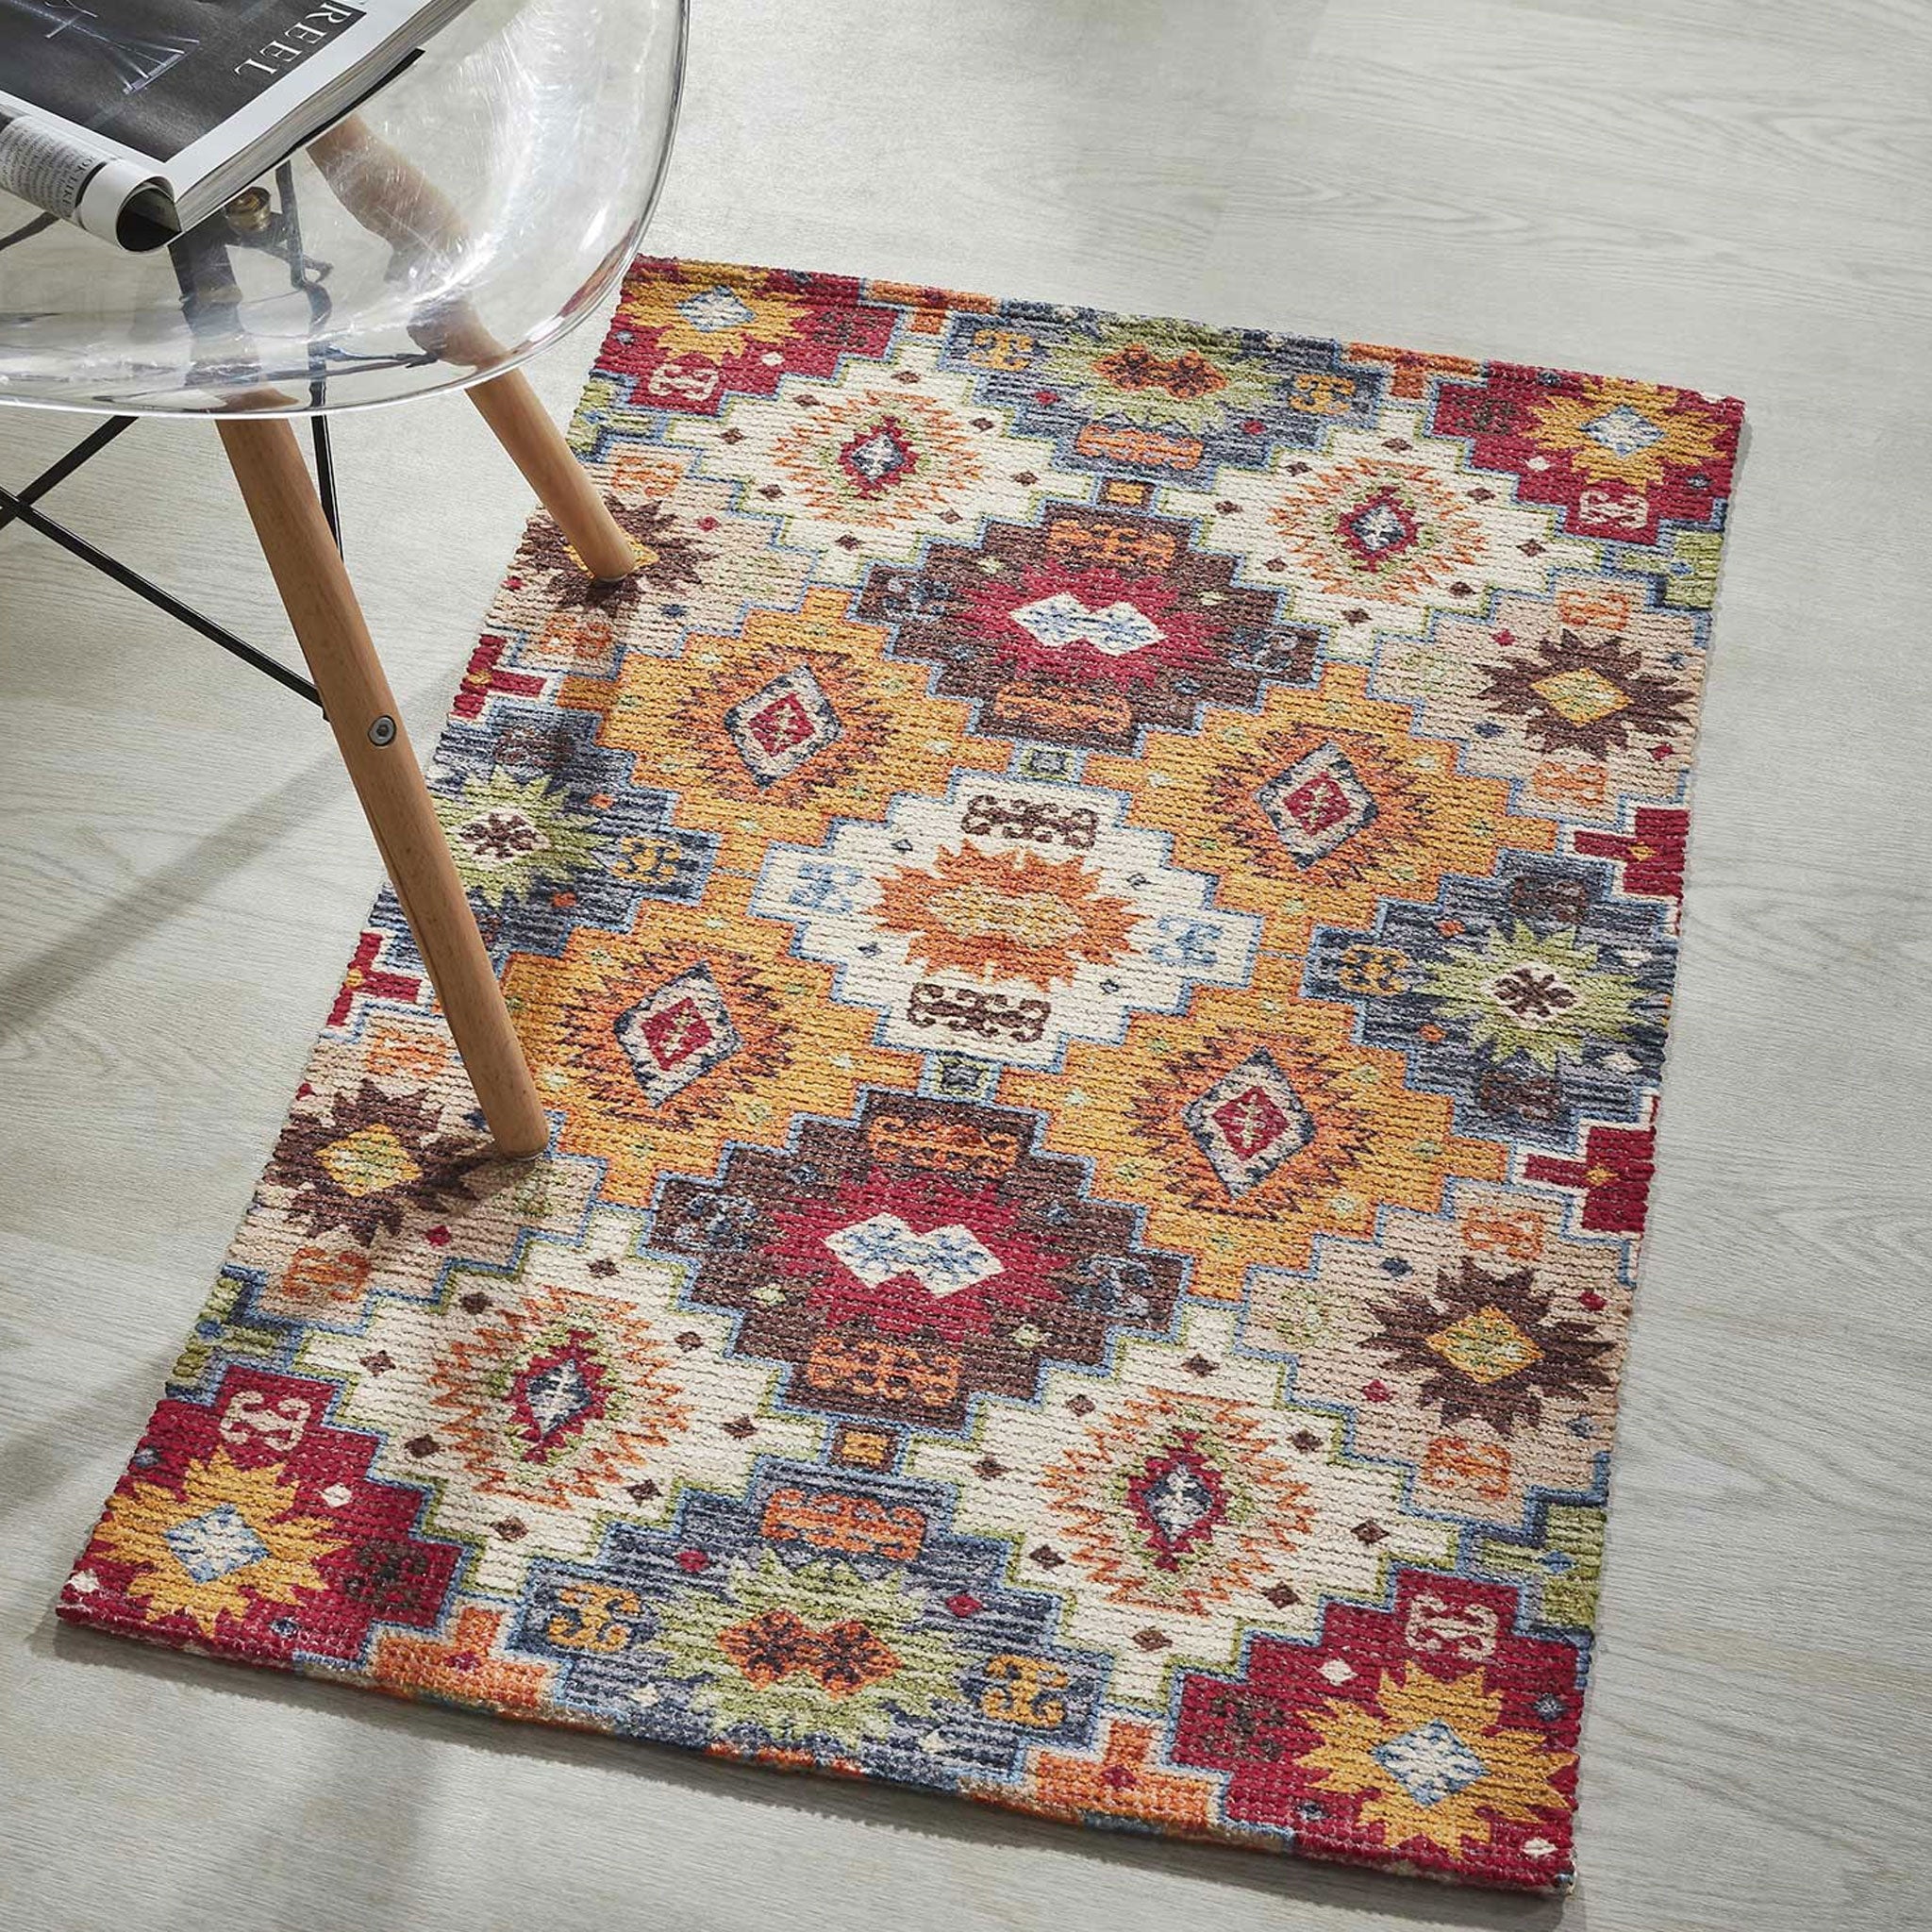 Mona B Printed Vintage Dhurrie Carpet Rug Runner Floor Mat for Living Room Bedroom: 2 X 3 Feet Multi Color - PR-116 (2436)